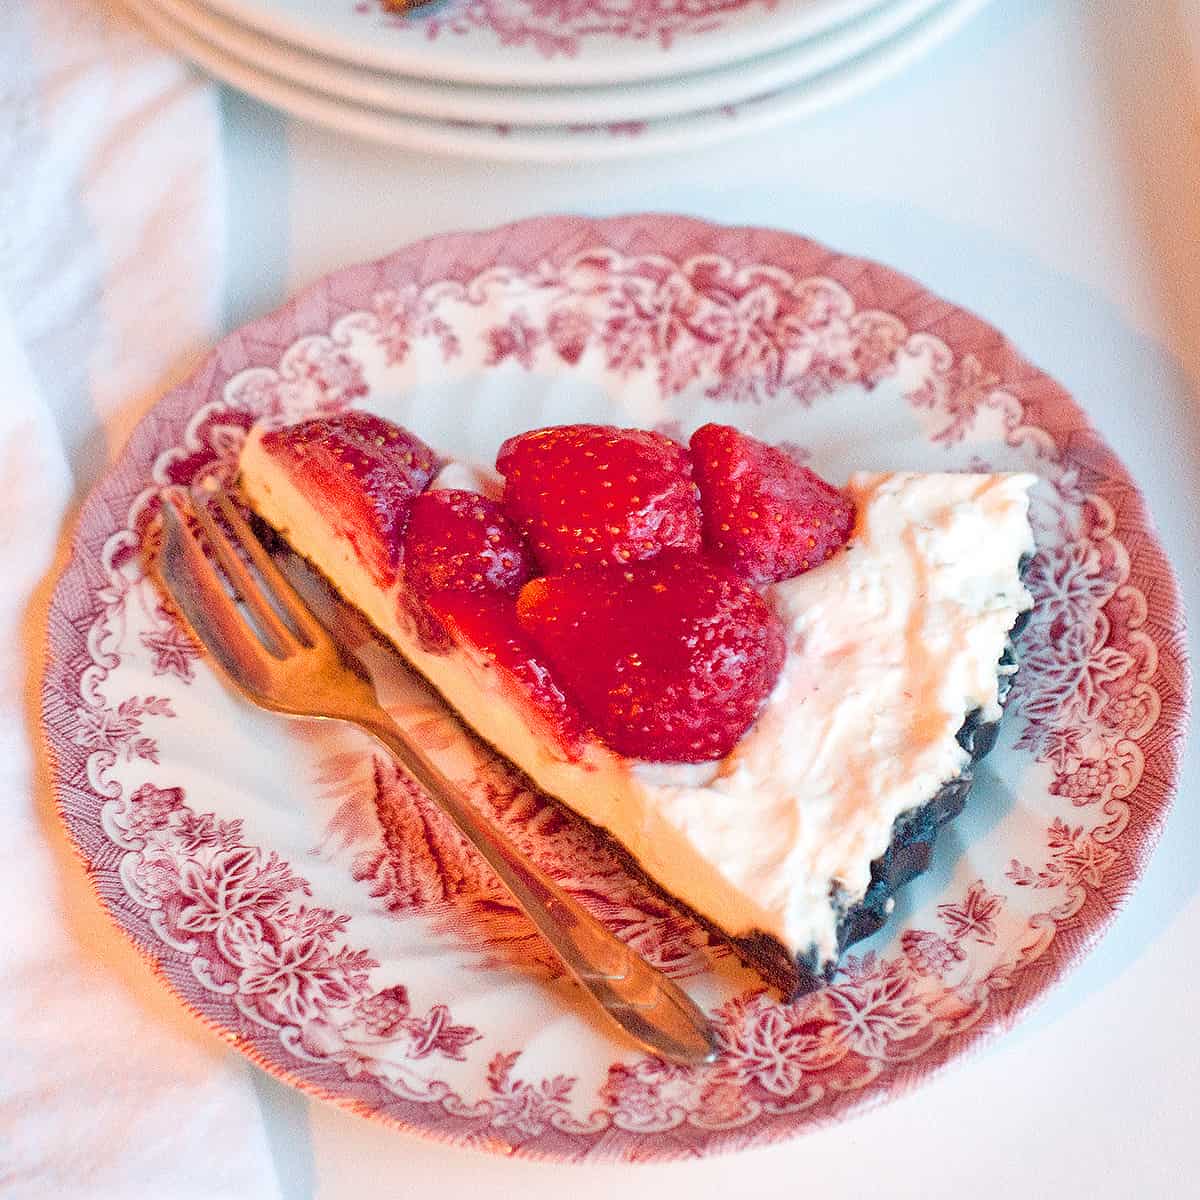 Strawberry pie on a decorative vintage plate.